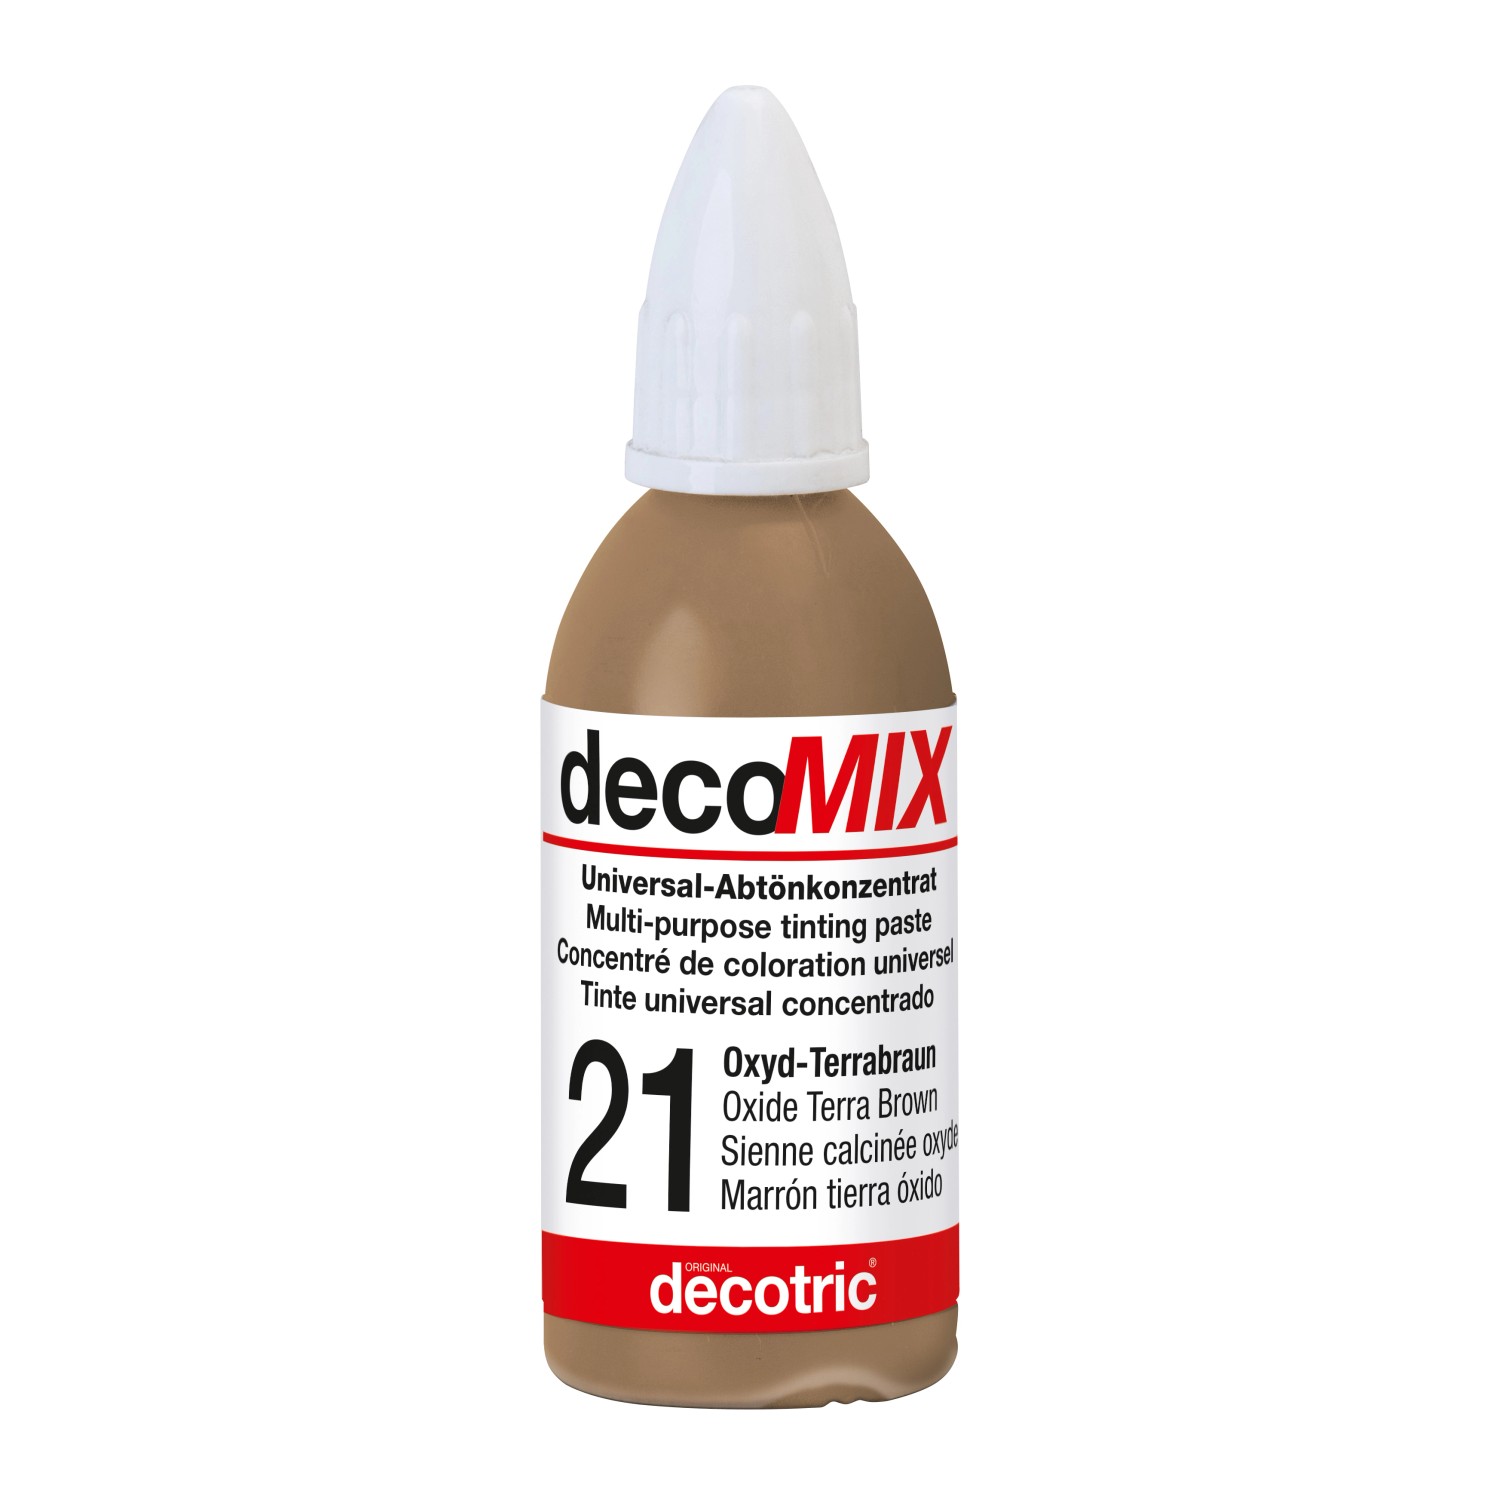 Decomix Universal-Abtönkonzentrat Oxyd-Terrabraun 20 ml